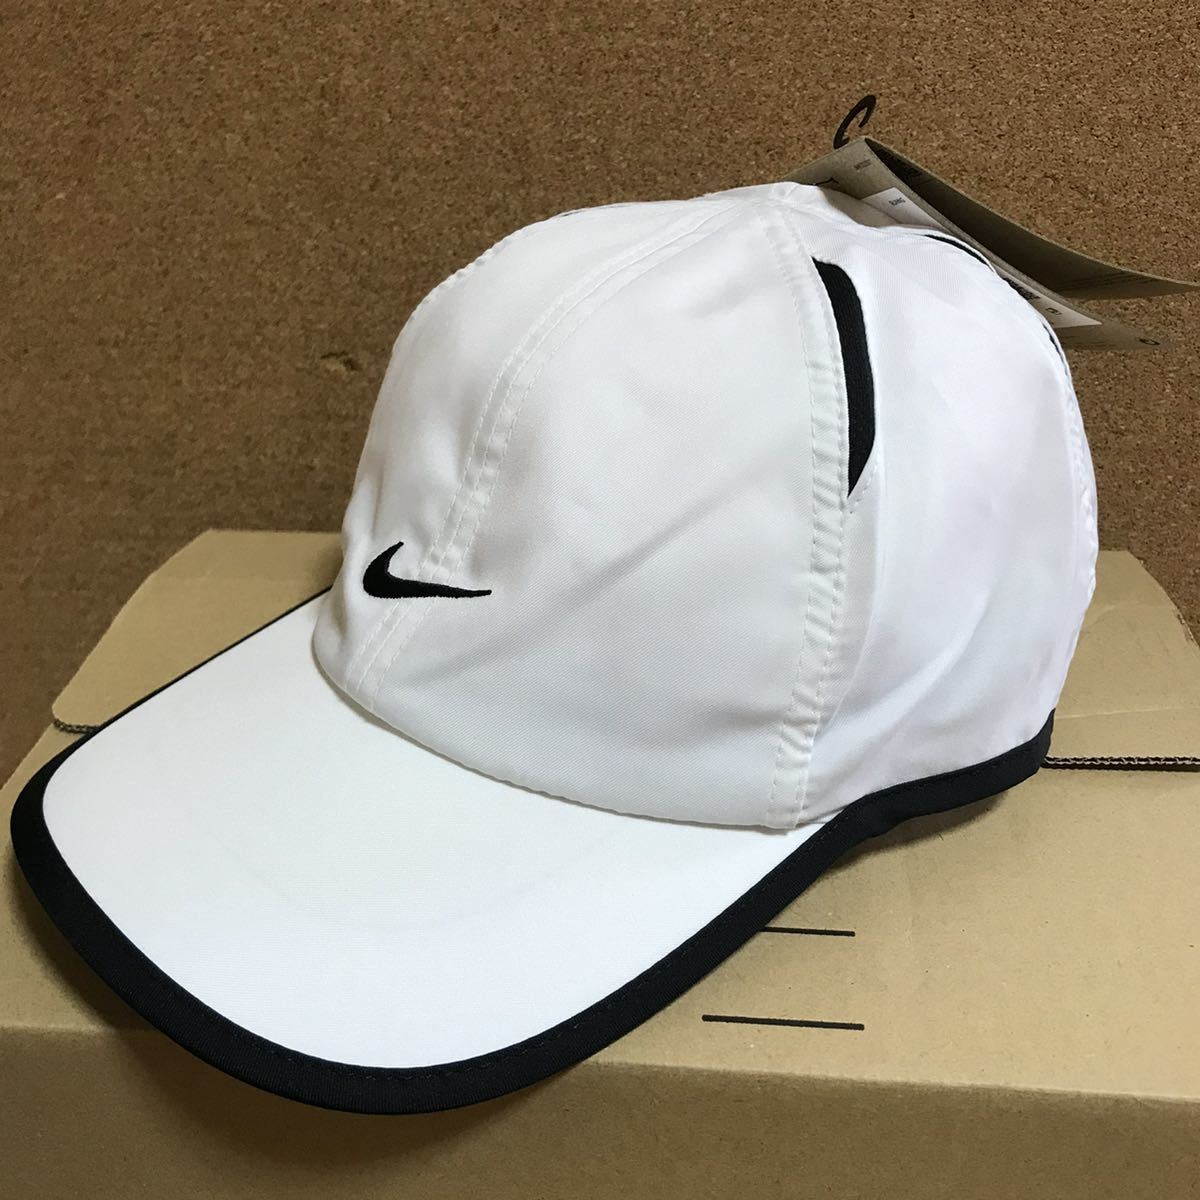 NIKE Nike бег колпак шляпа перо свет белый 57-59cm включая доставку 